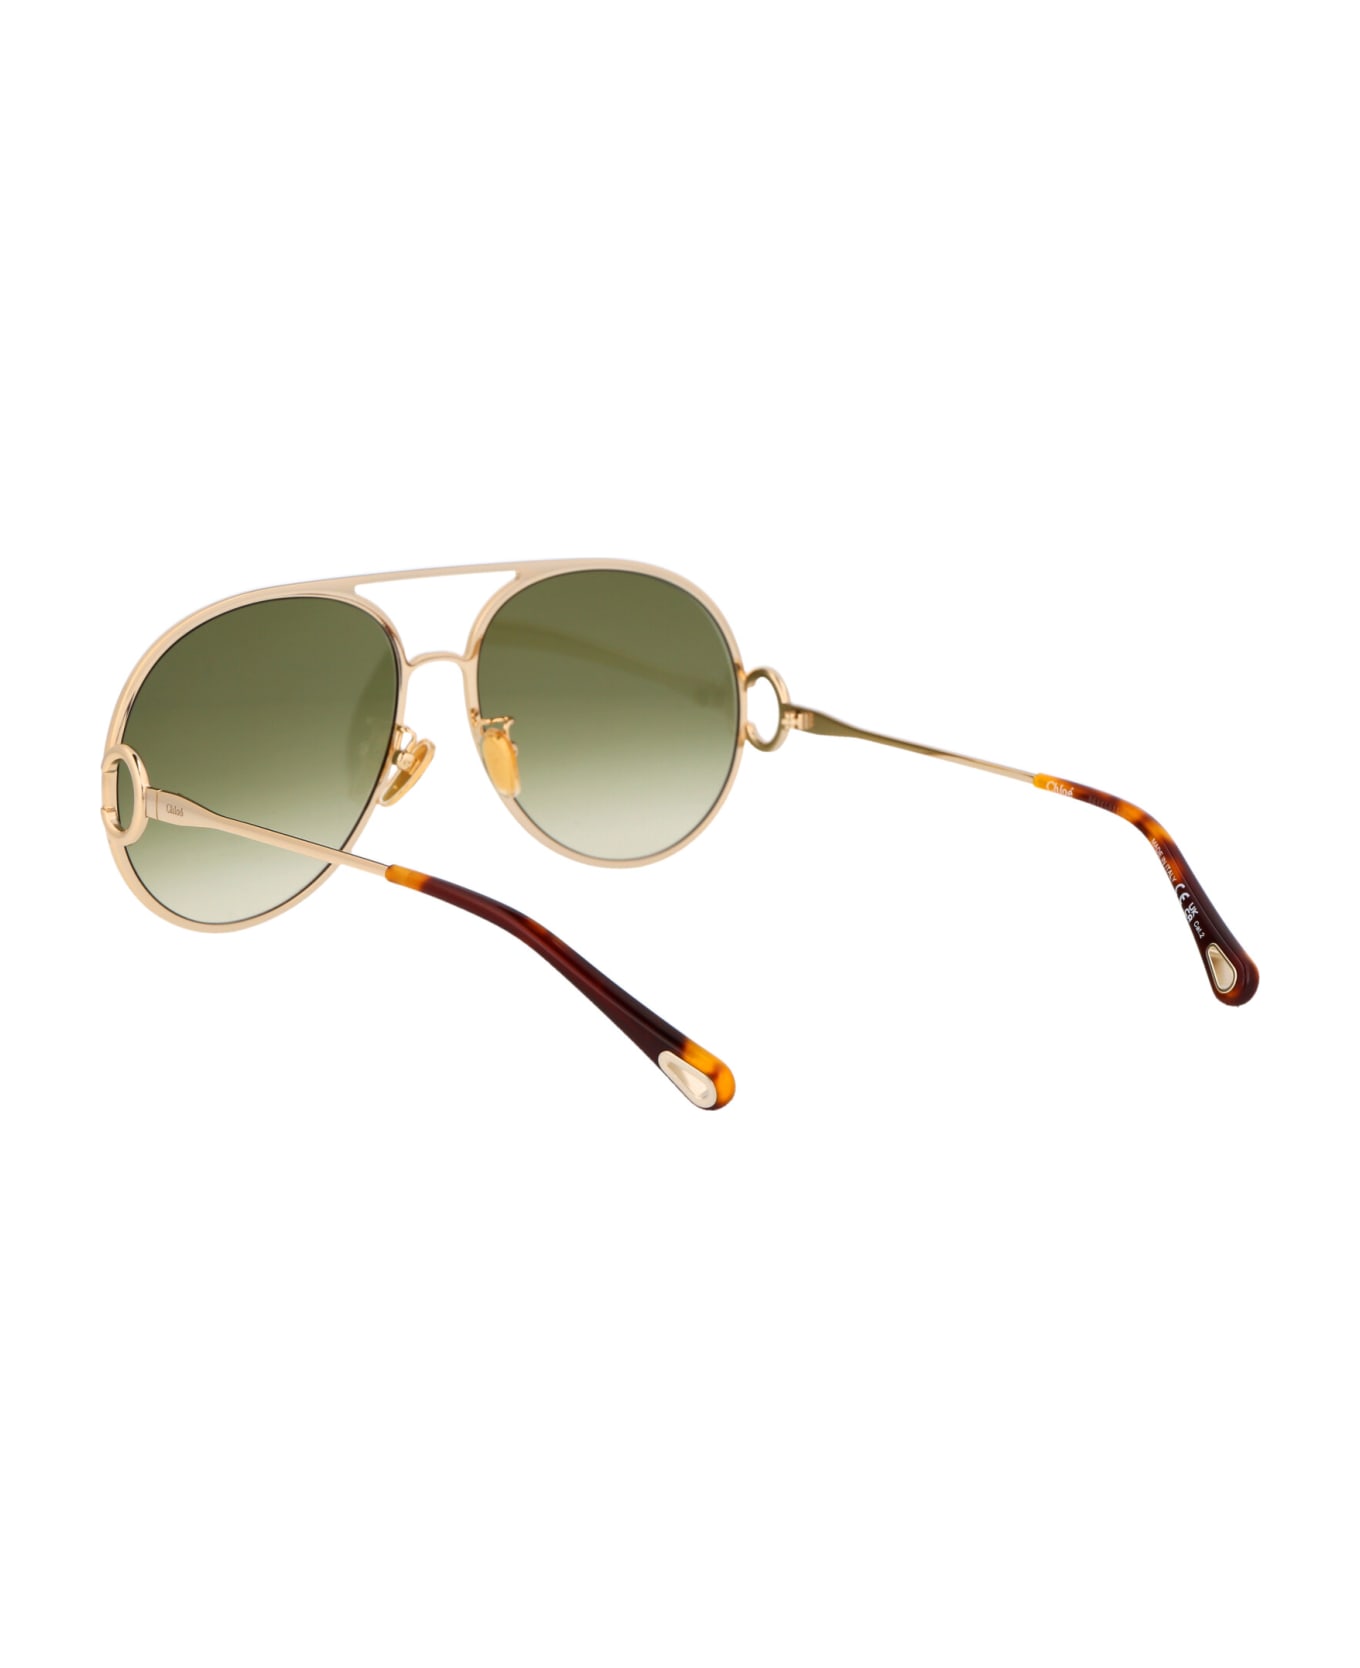 Chloé Eyewear Ch0145s Sunglasses - 002 GOLD GOLD GREEN